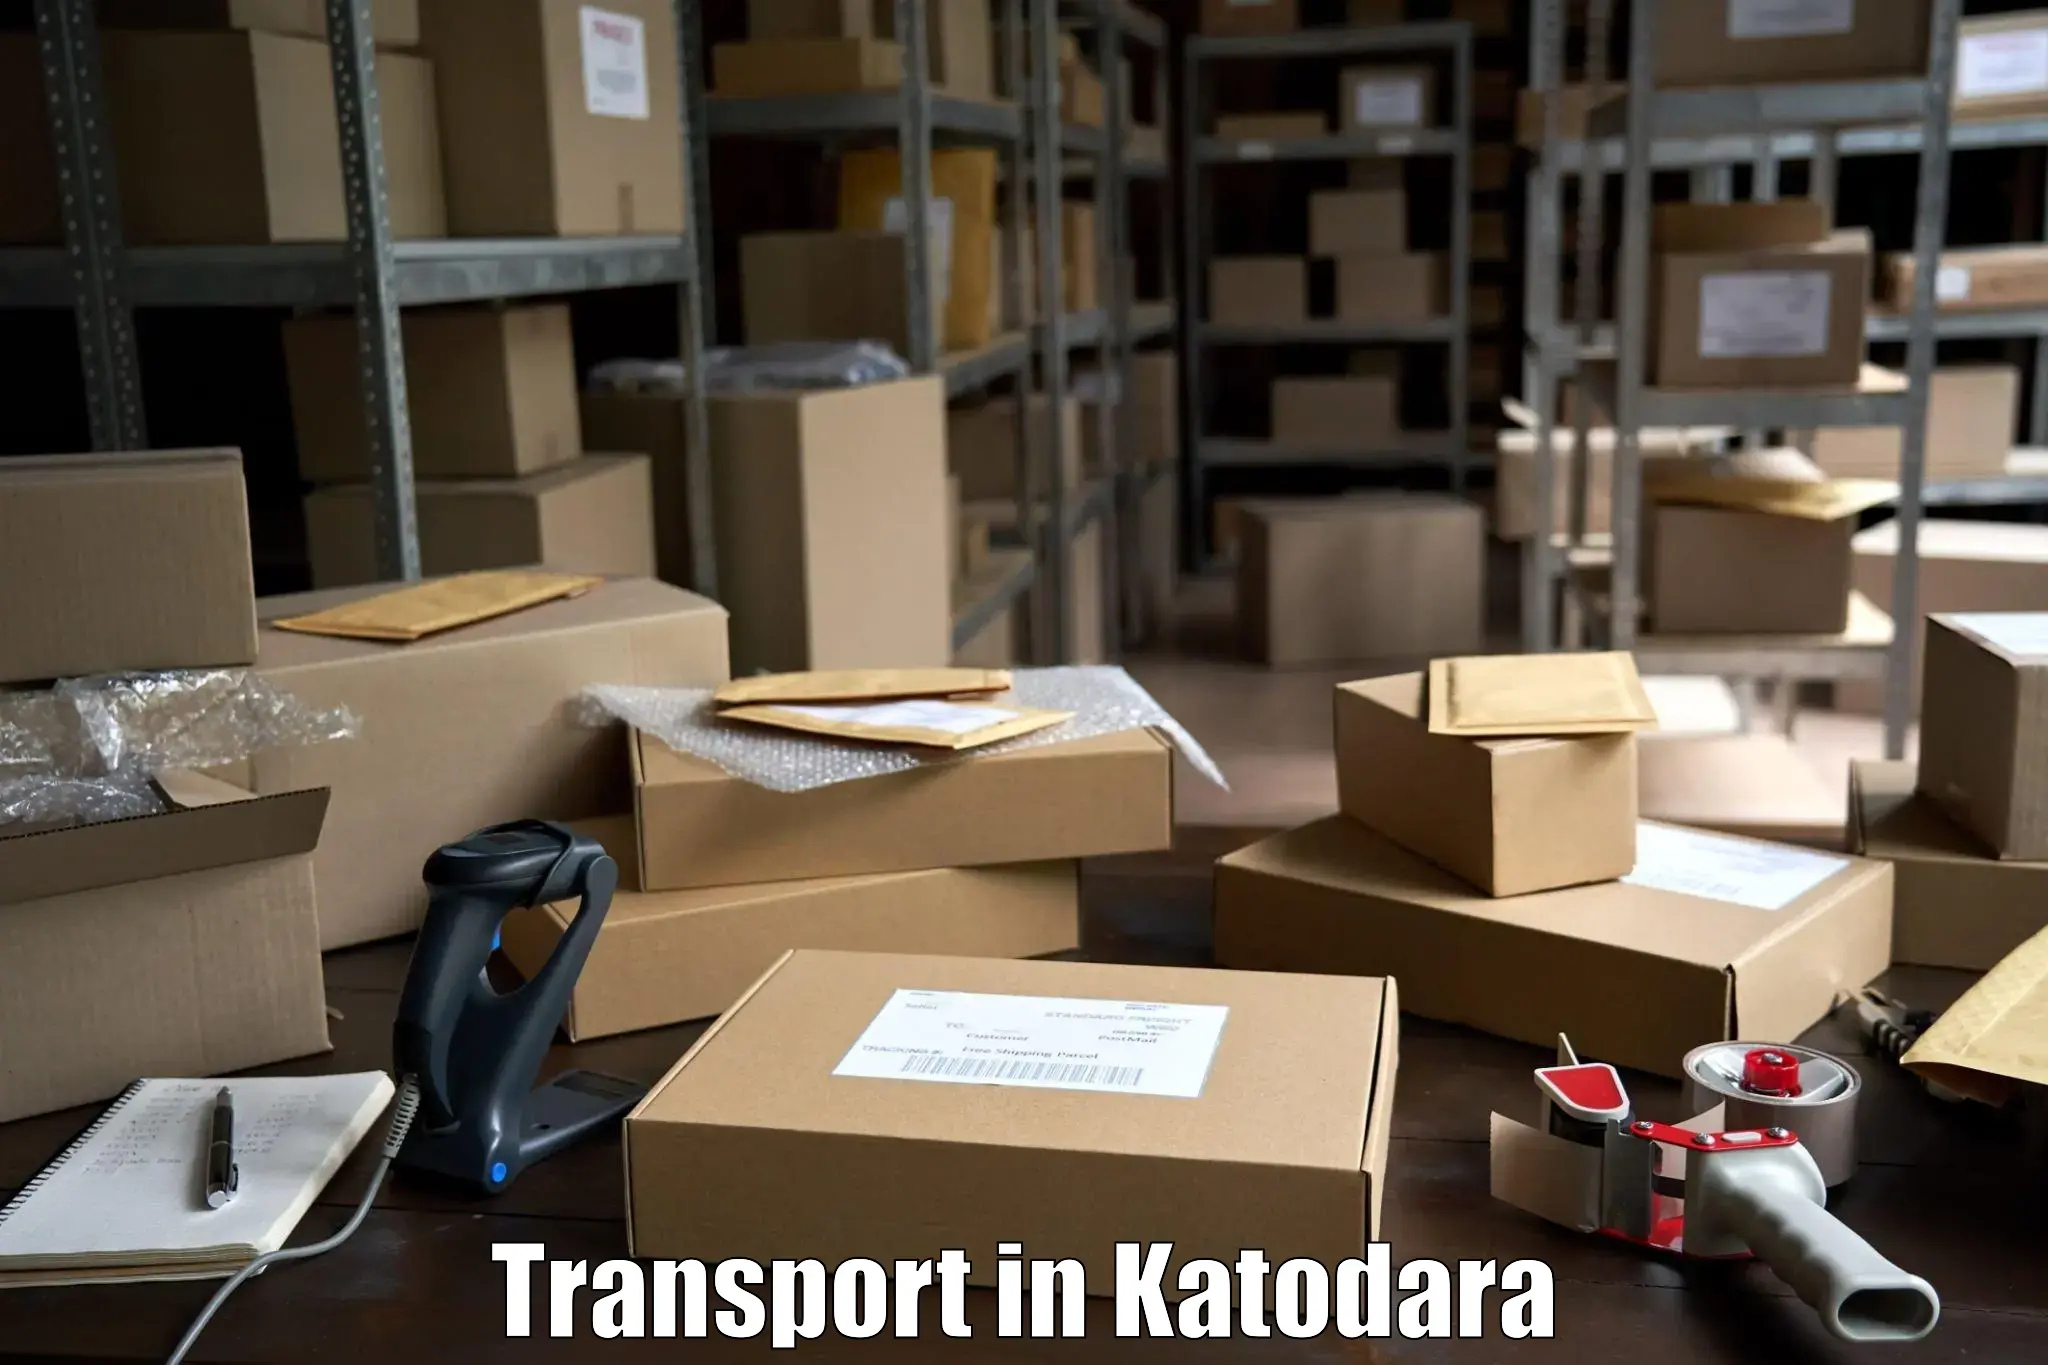 Daily transport service in Katodara